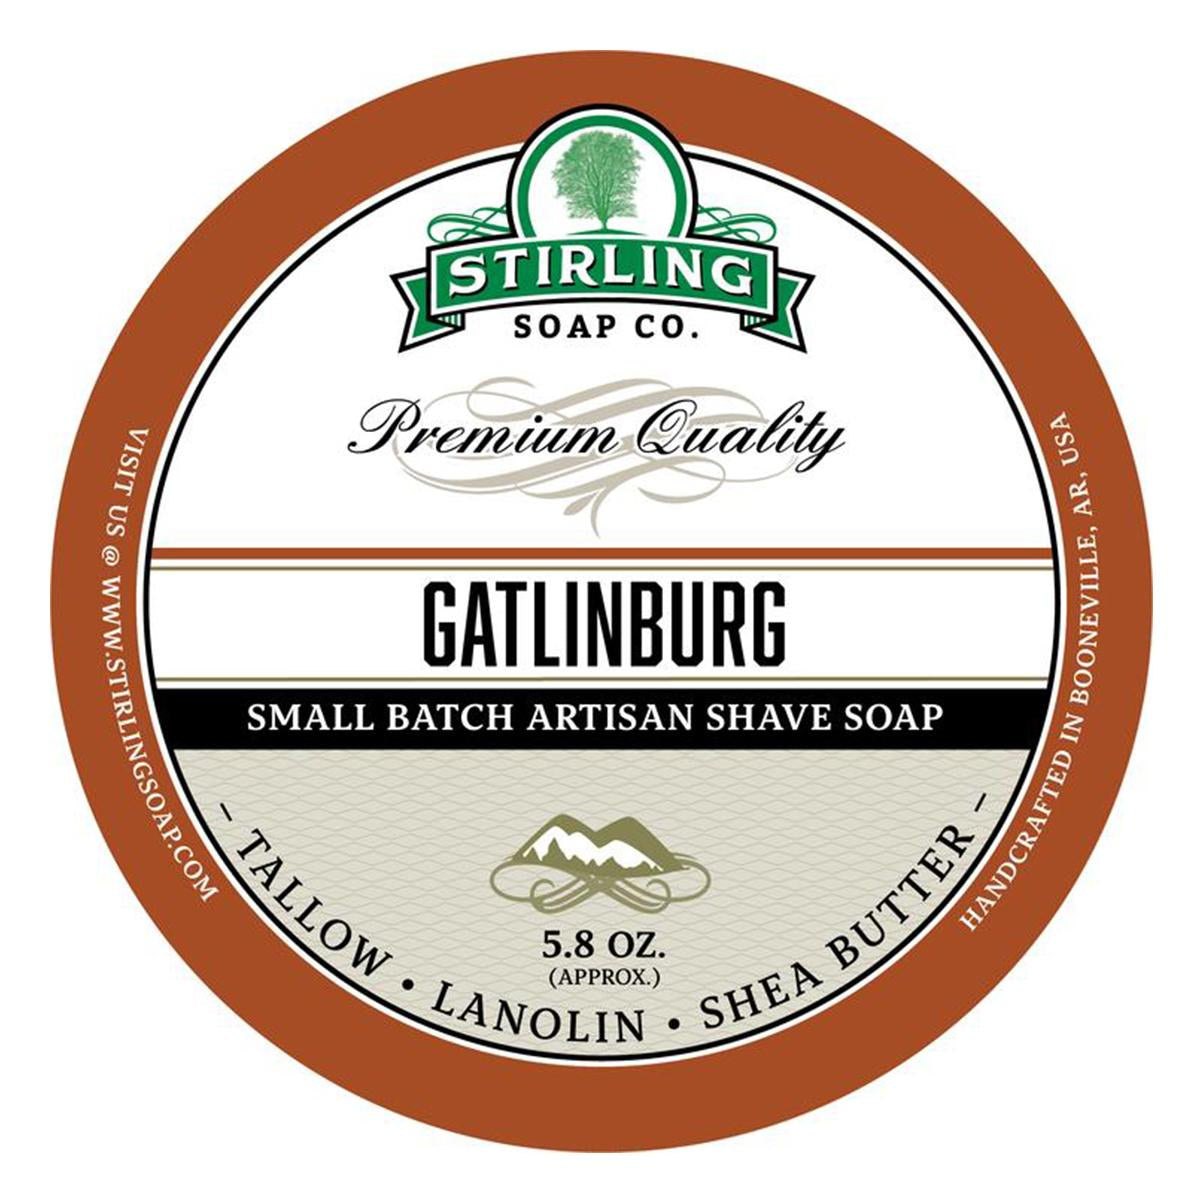 Primary image of Gatlinburg Shave Soap